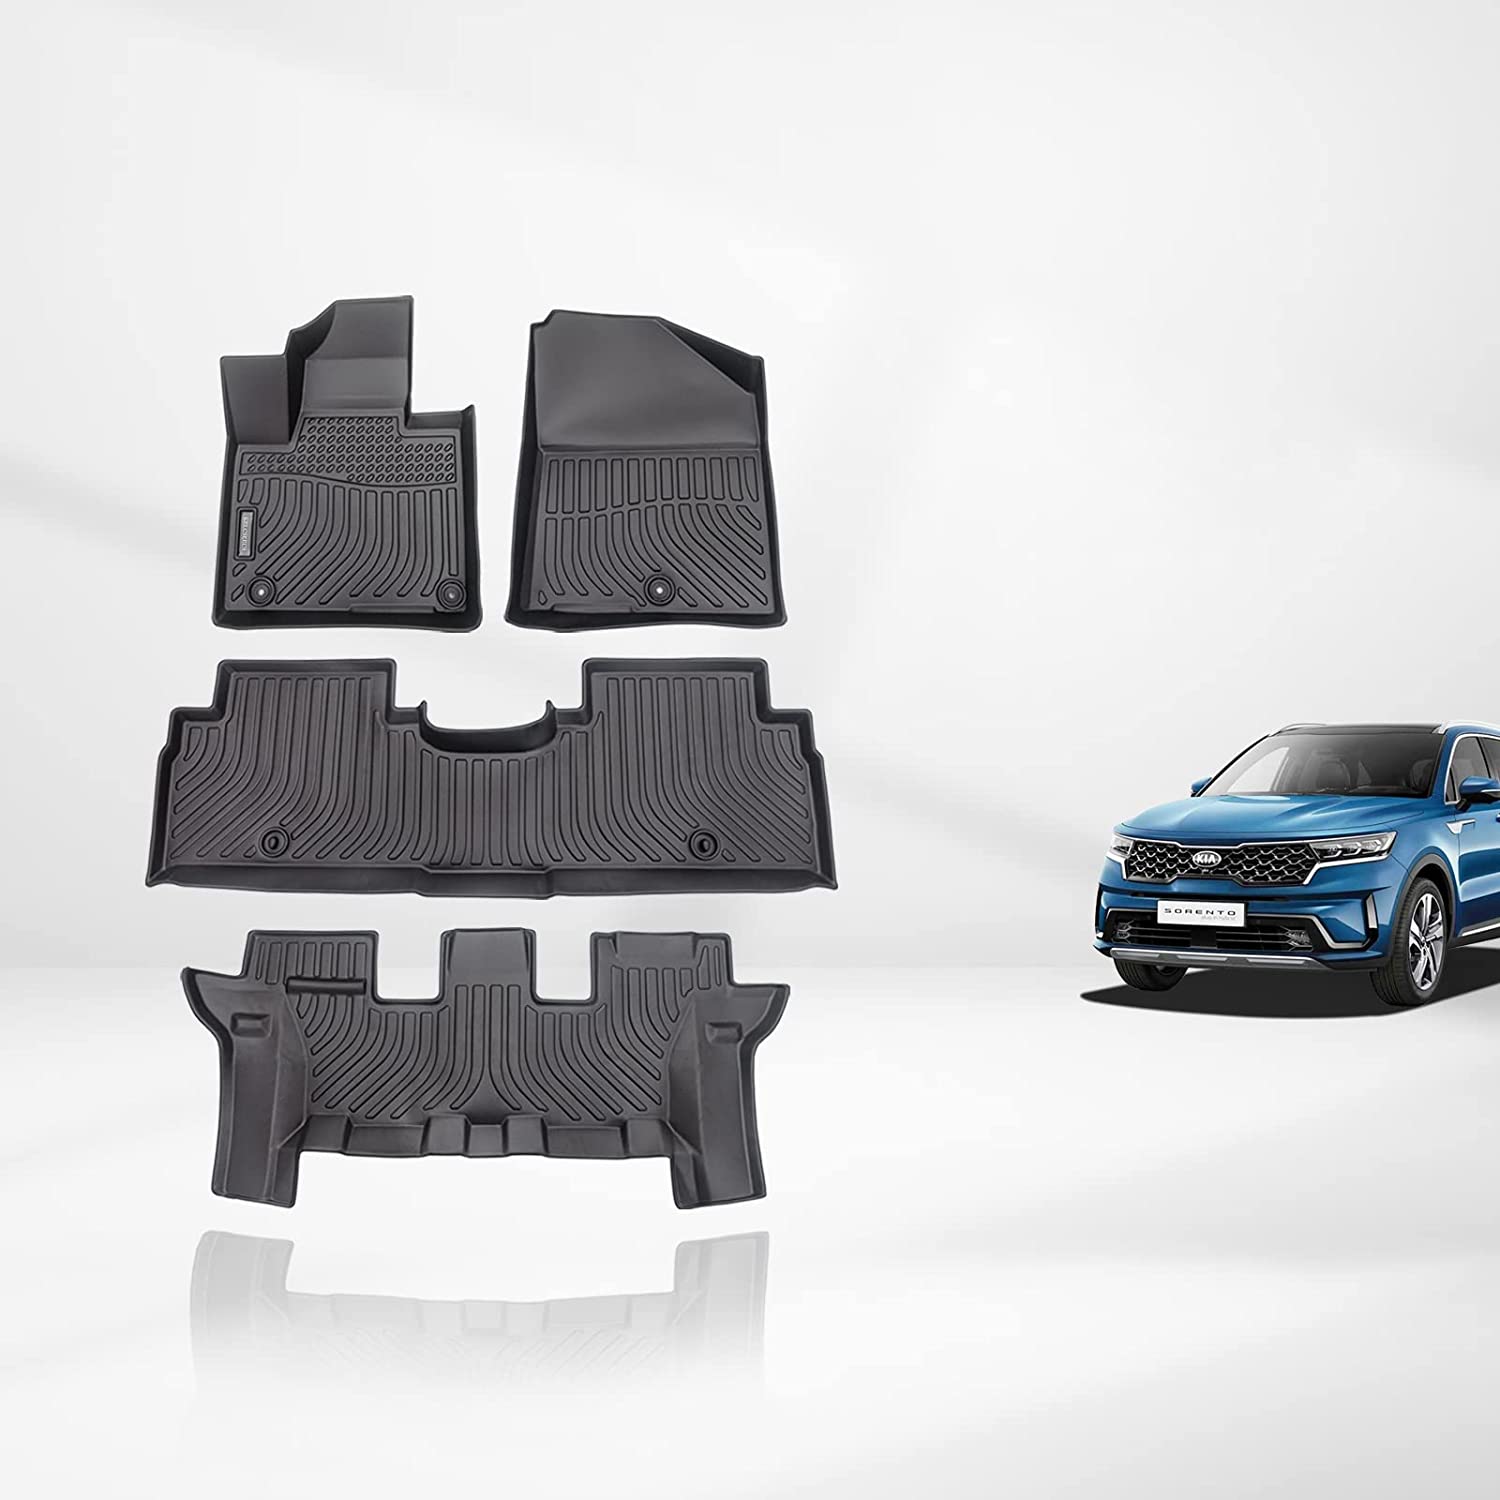 Kelcseecs All Weather 3D Tech Design TPE Car Floor Mats Floor Liners For Kia Sorento 2016-2020